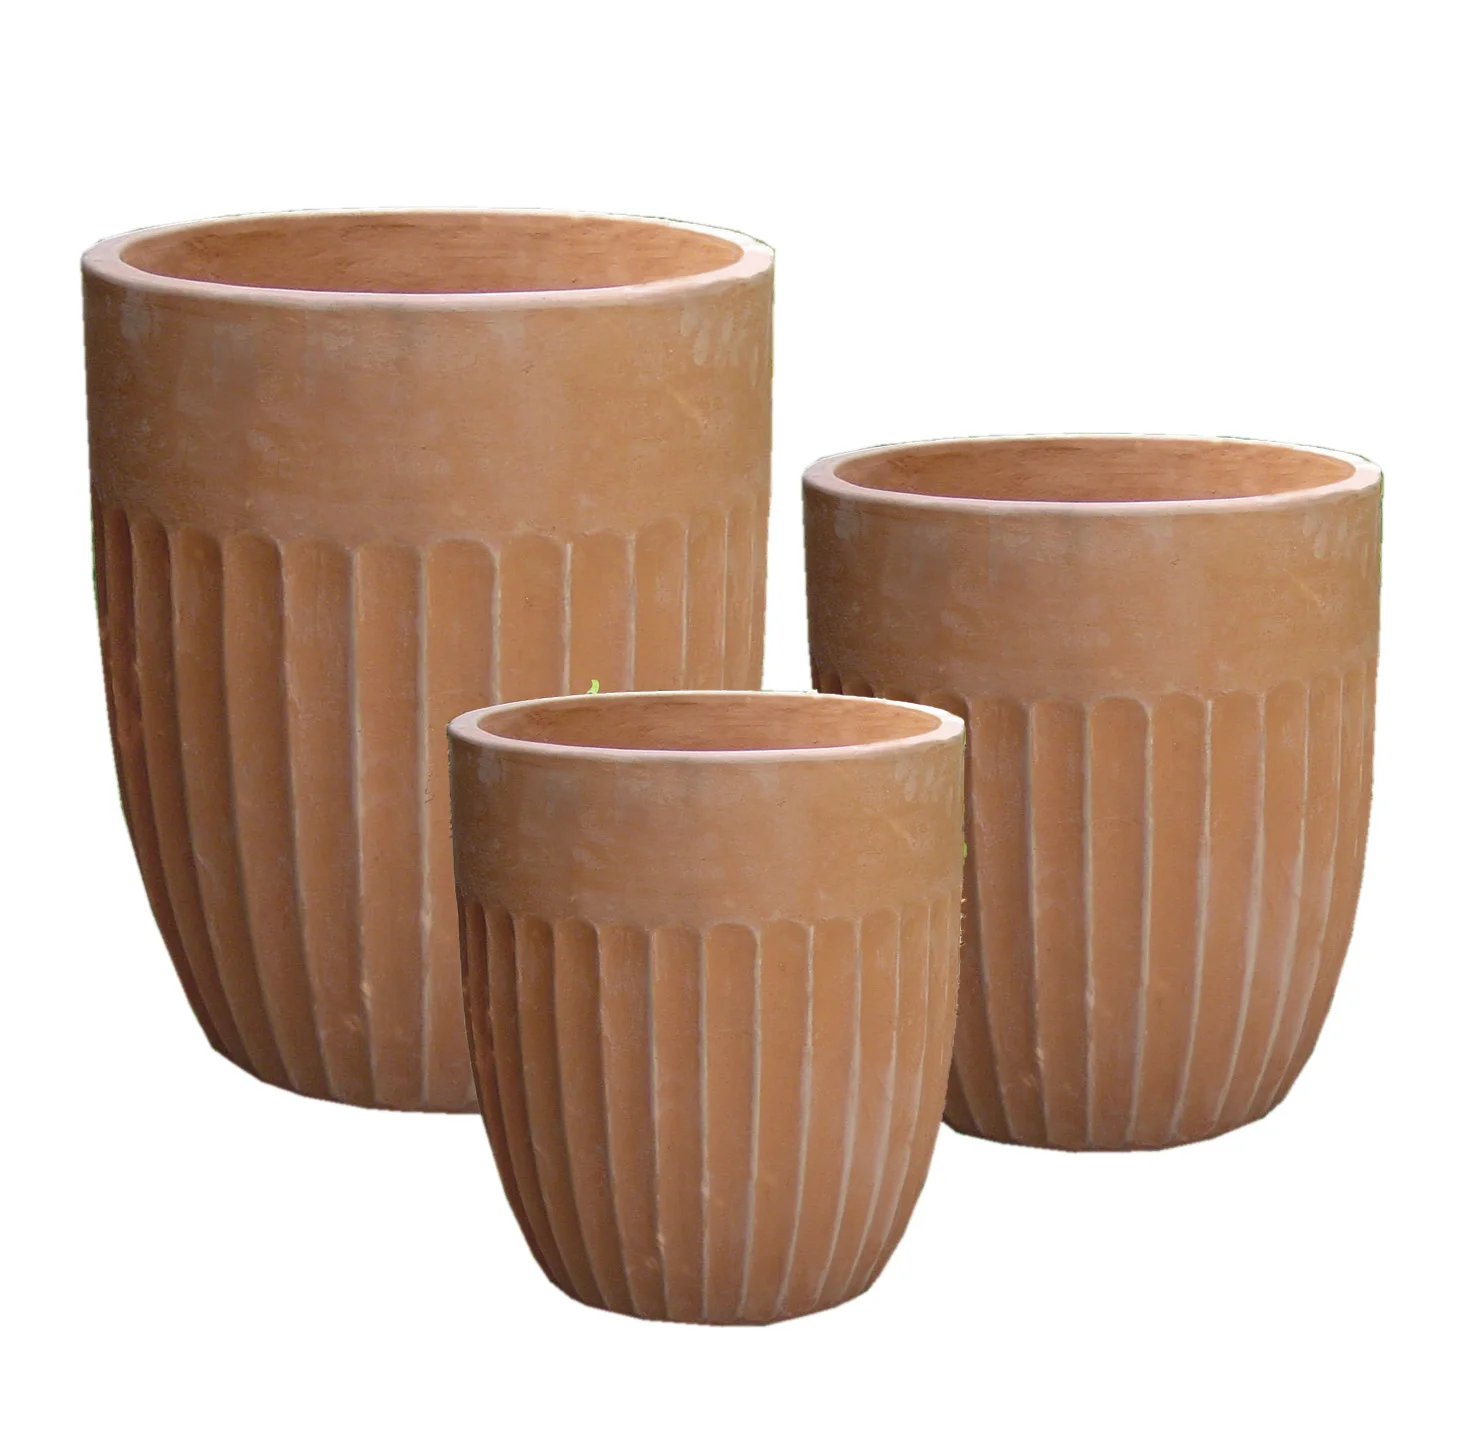 Wholesale Ceramic Terracotta Flower Plant Pots Indoor Outdoor Home Decoration Kit Design for Nursery Room or Garden Floor Use